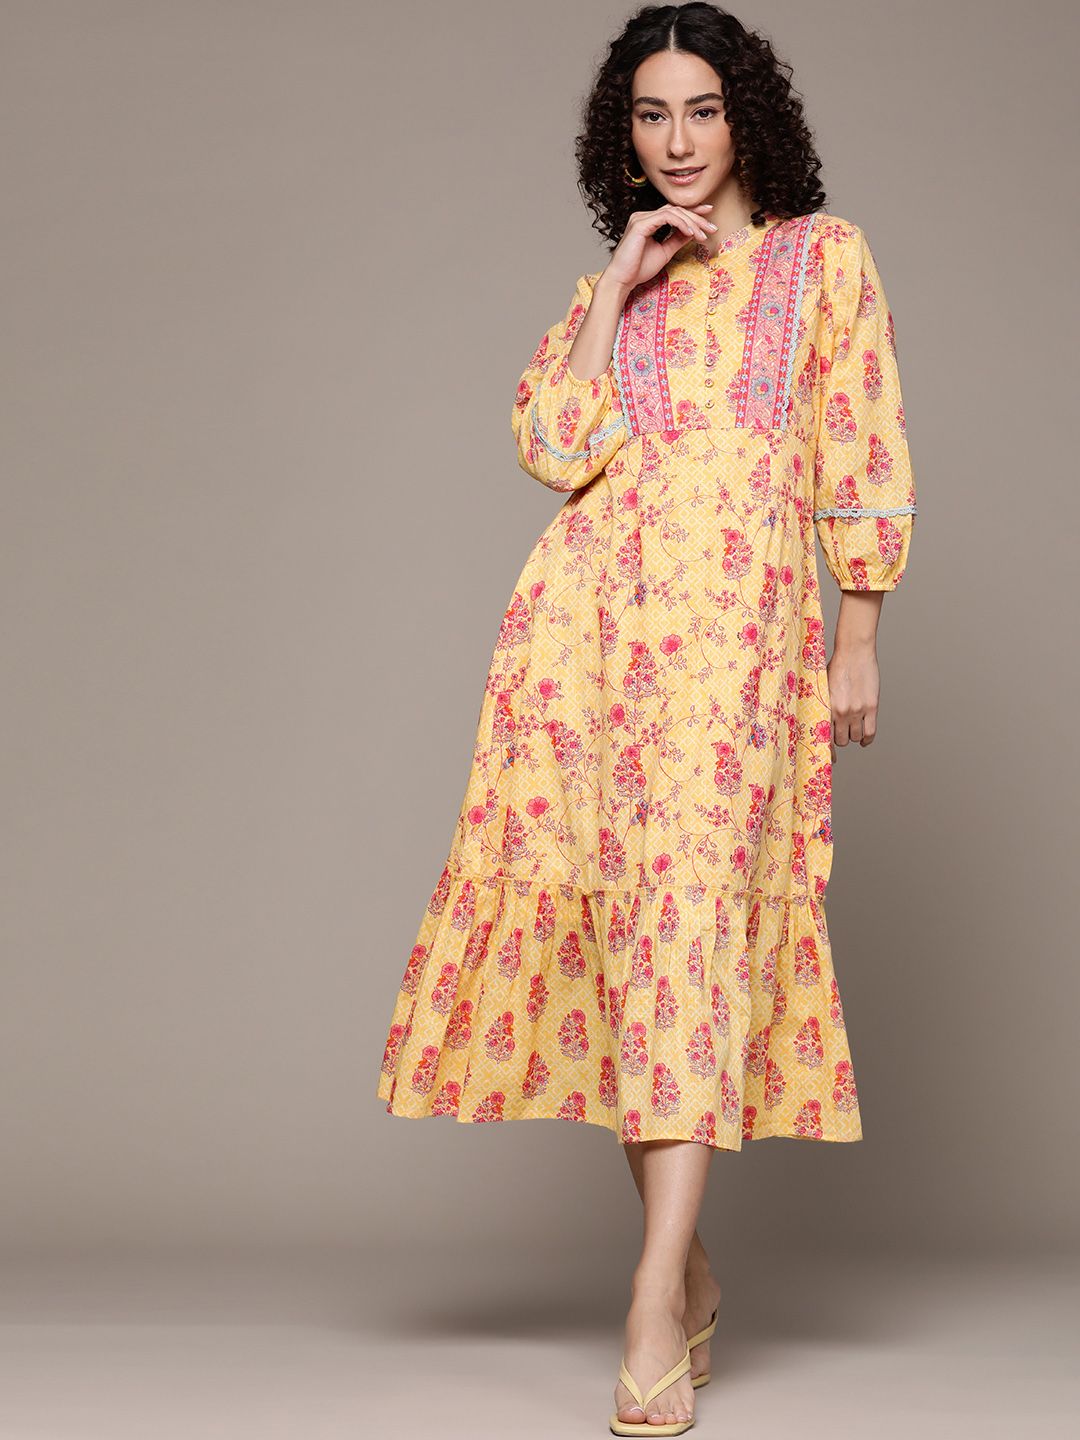 aarke Ritu Kumar Yellow A-Line Printed Tiered Dress Price in India